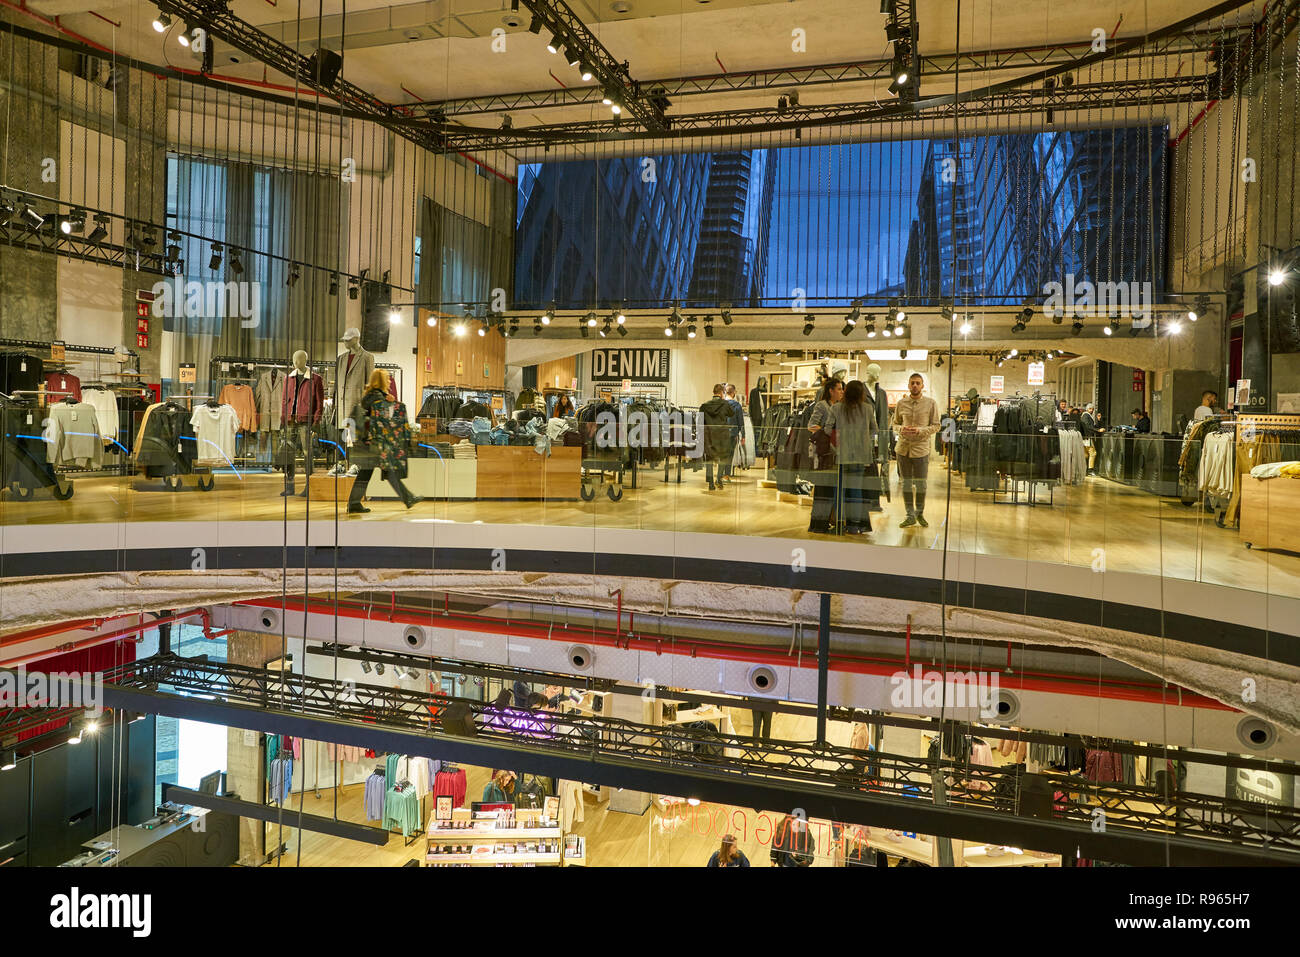 Bershka shopping centre -Fotos und -Bildmaterial in hoher Auflösung – Alamy